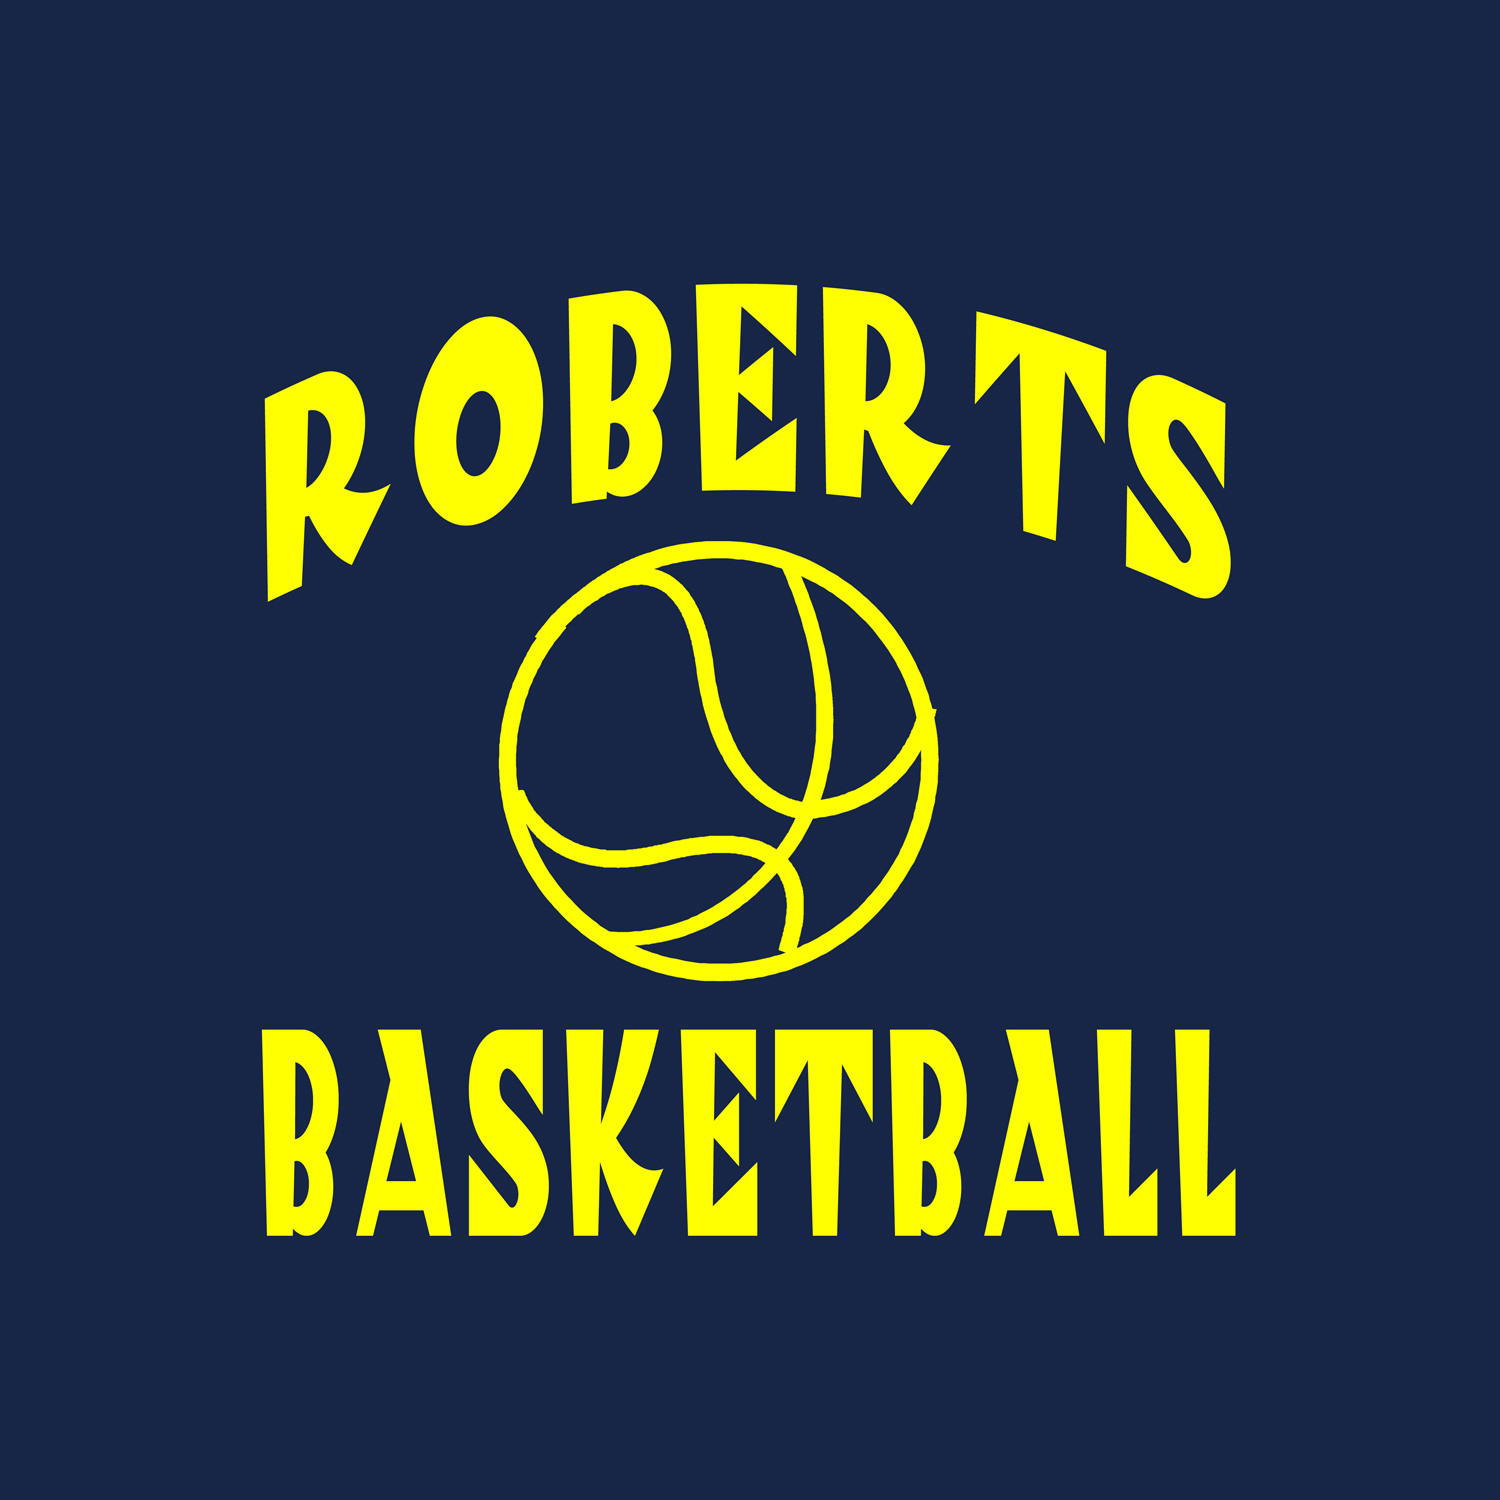 roberts_basketball